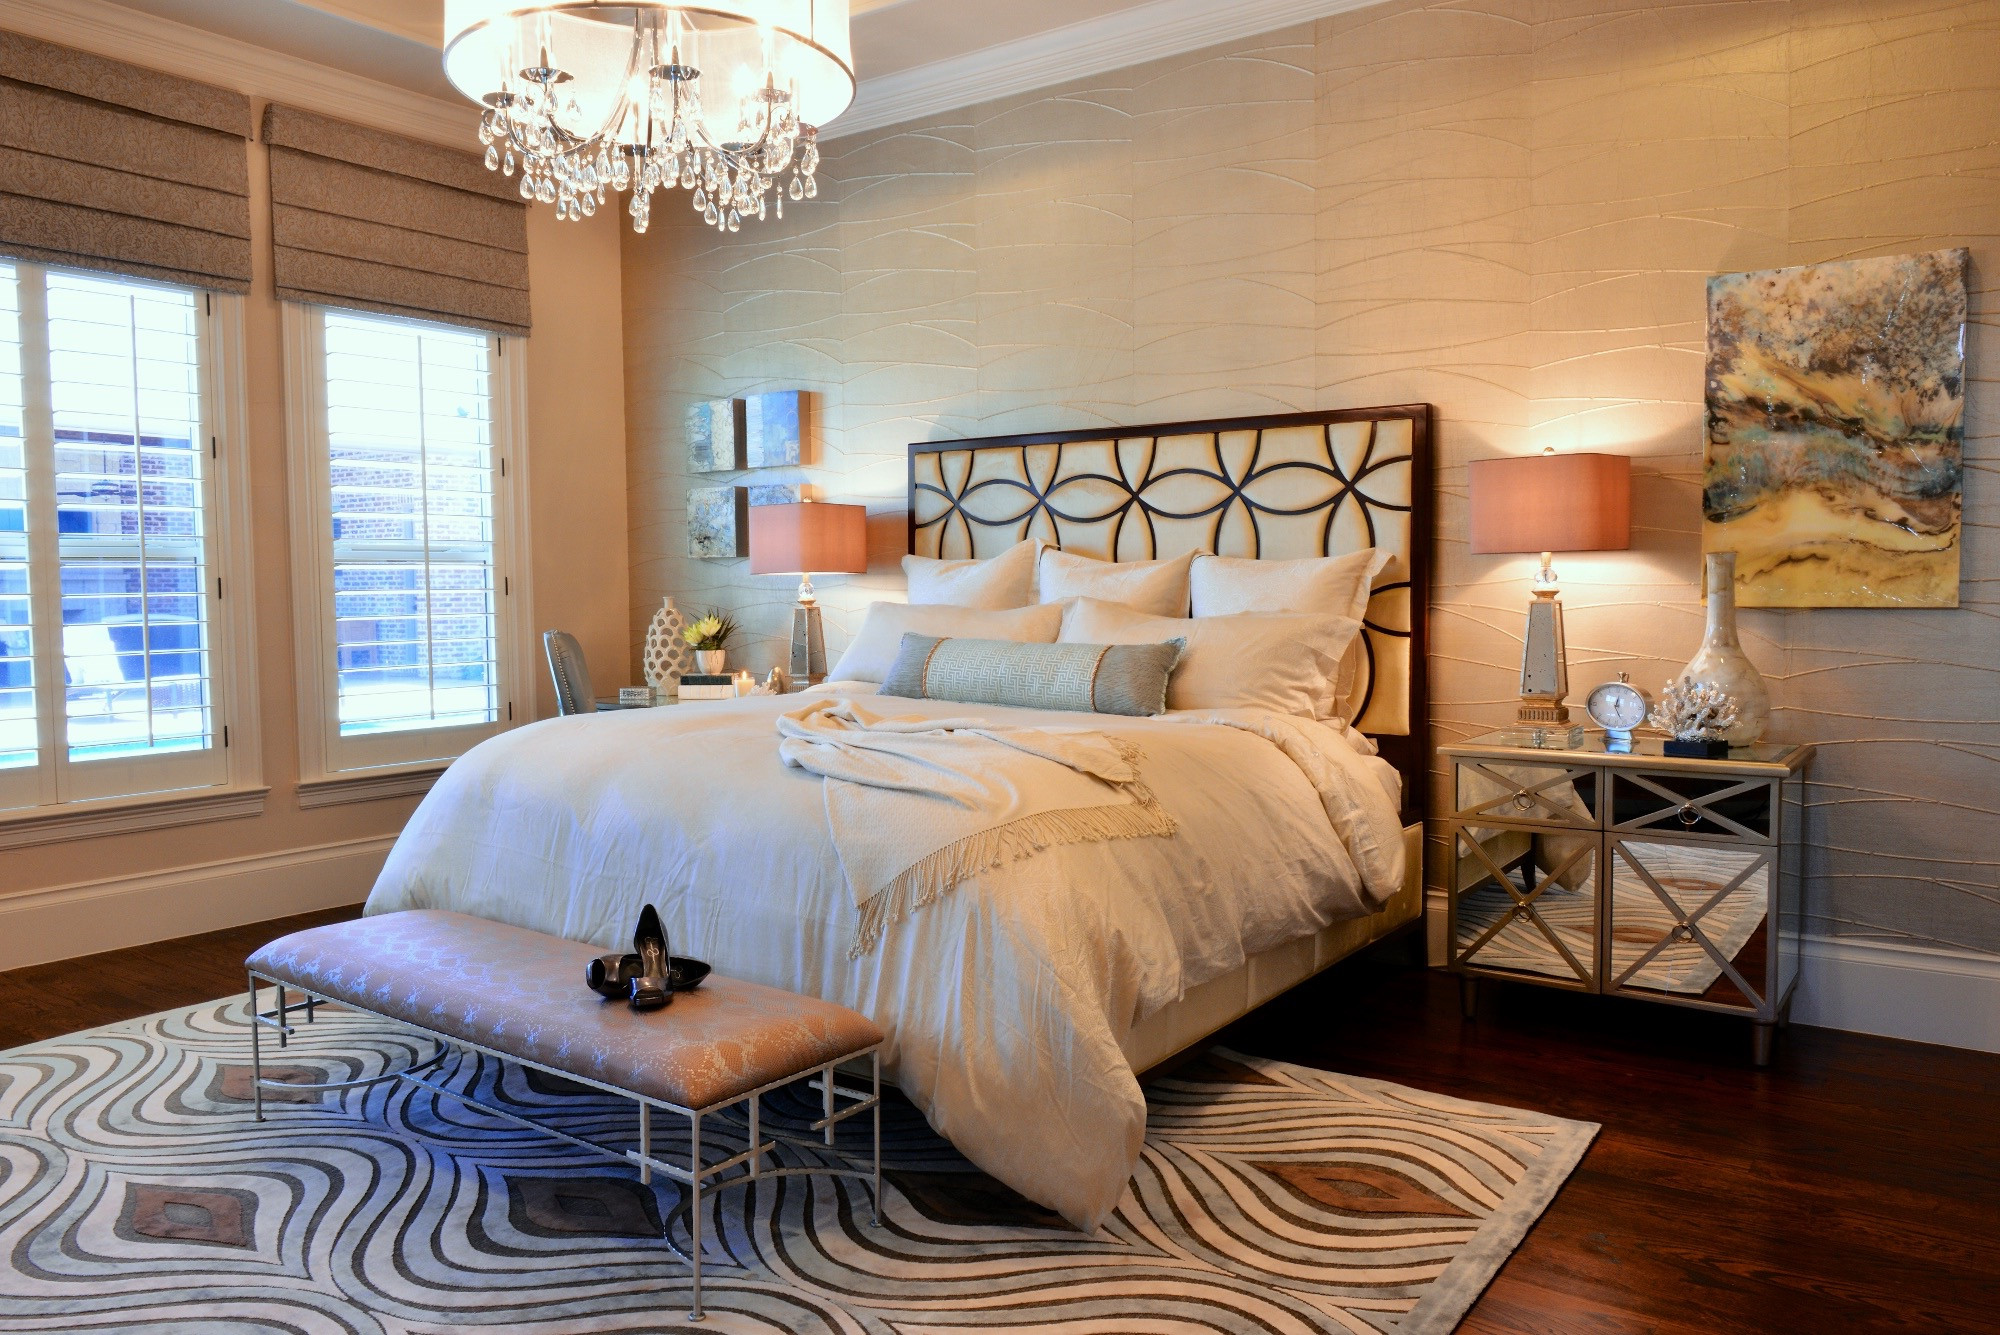 Elegant Bedspreads Master Bedroom
 2017 Beautiful Master Bedroom Interior Design Ideas